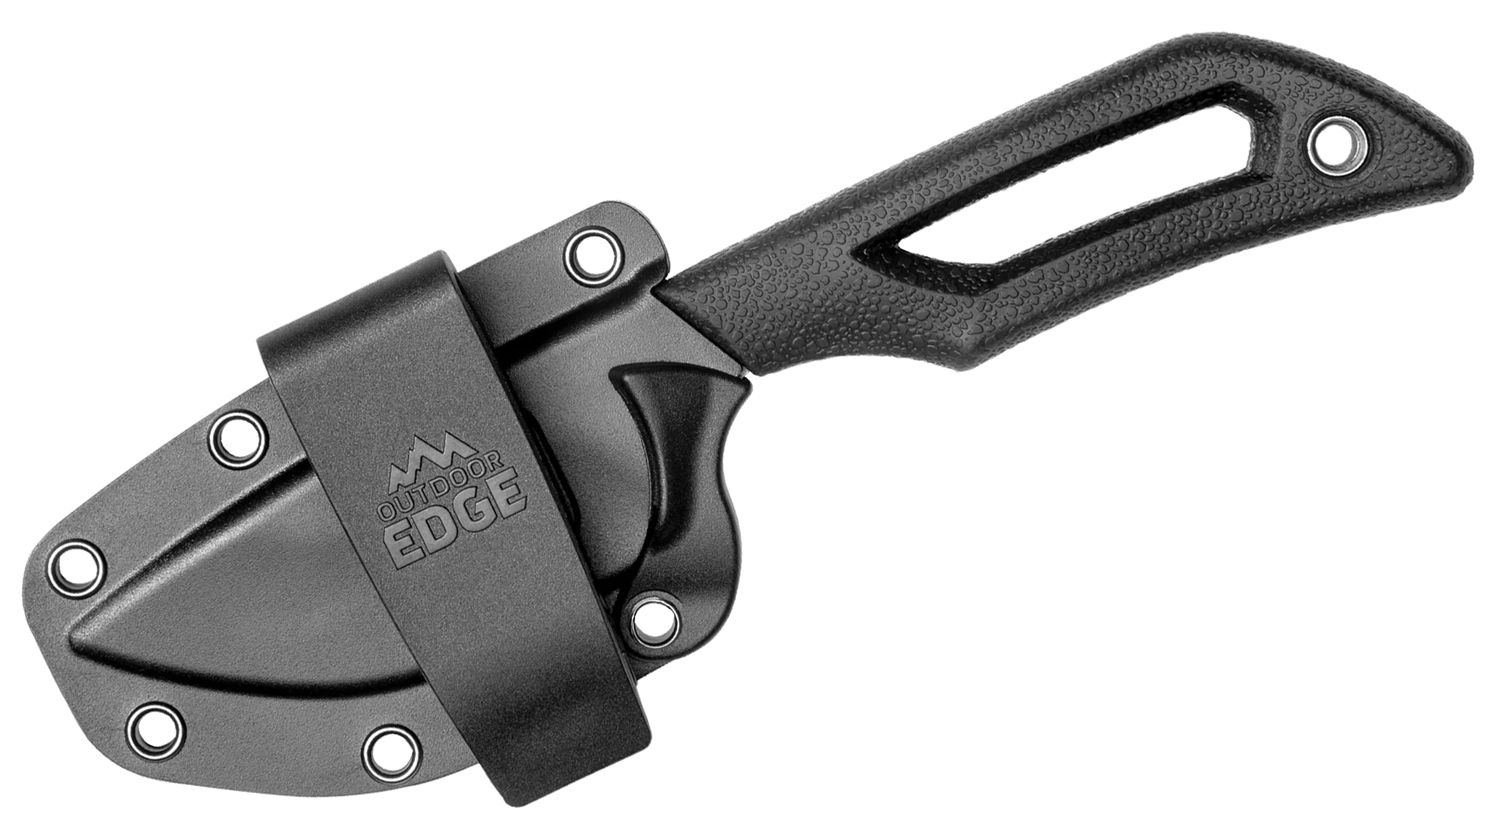 Outdoor Edge Pivot Drop Point Fixed Blade